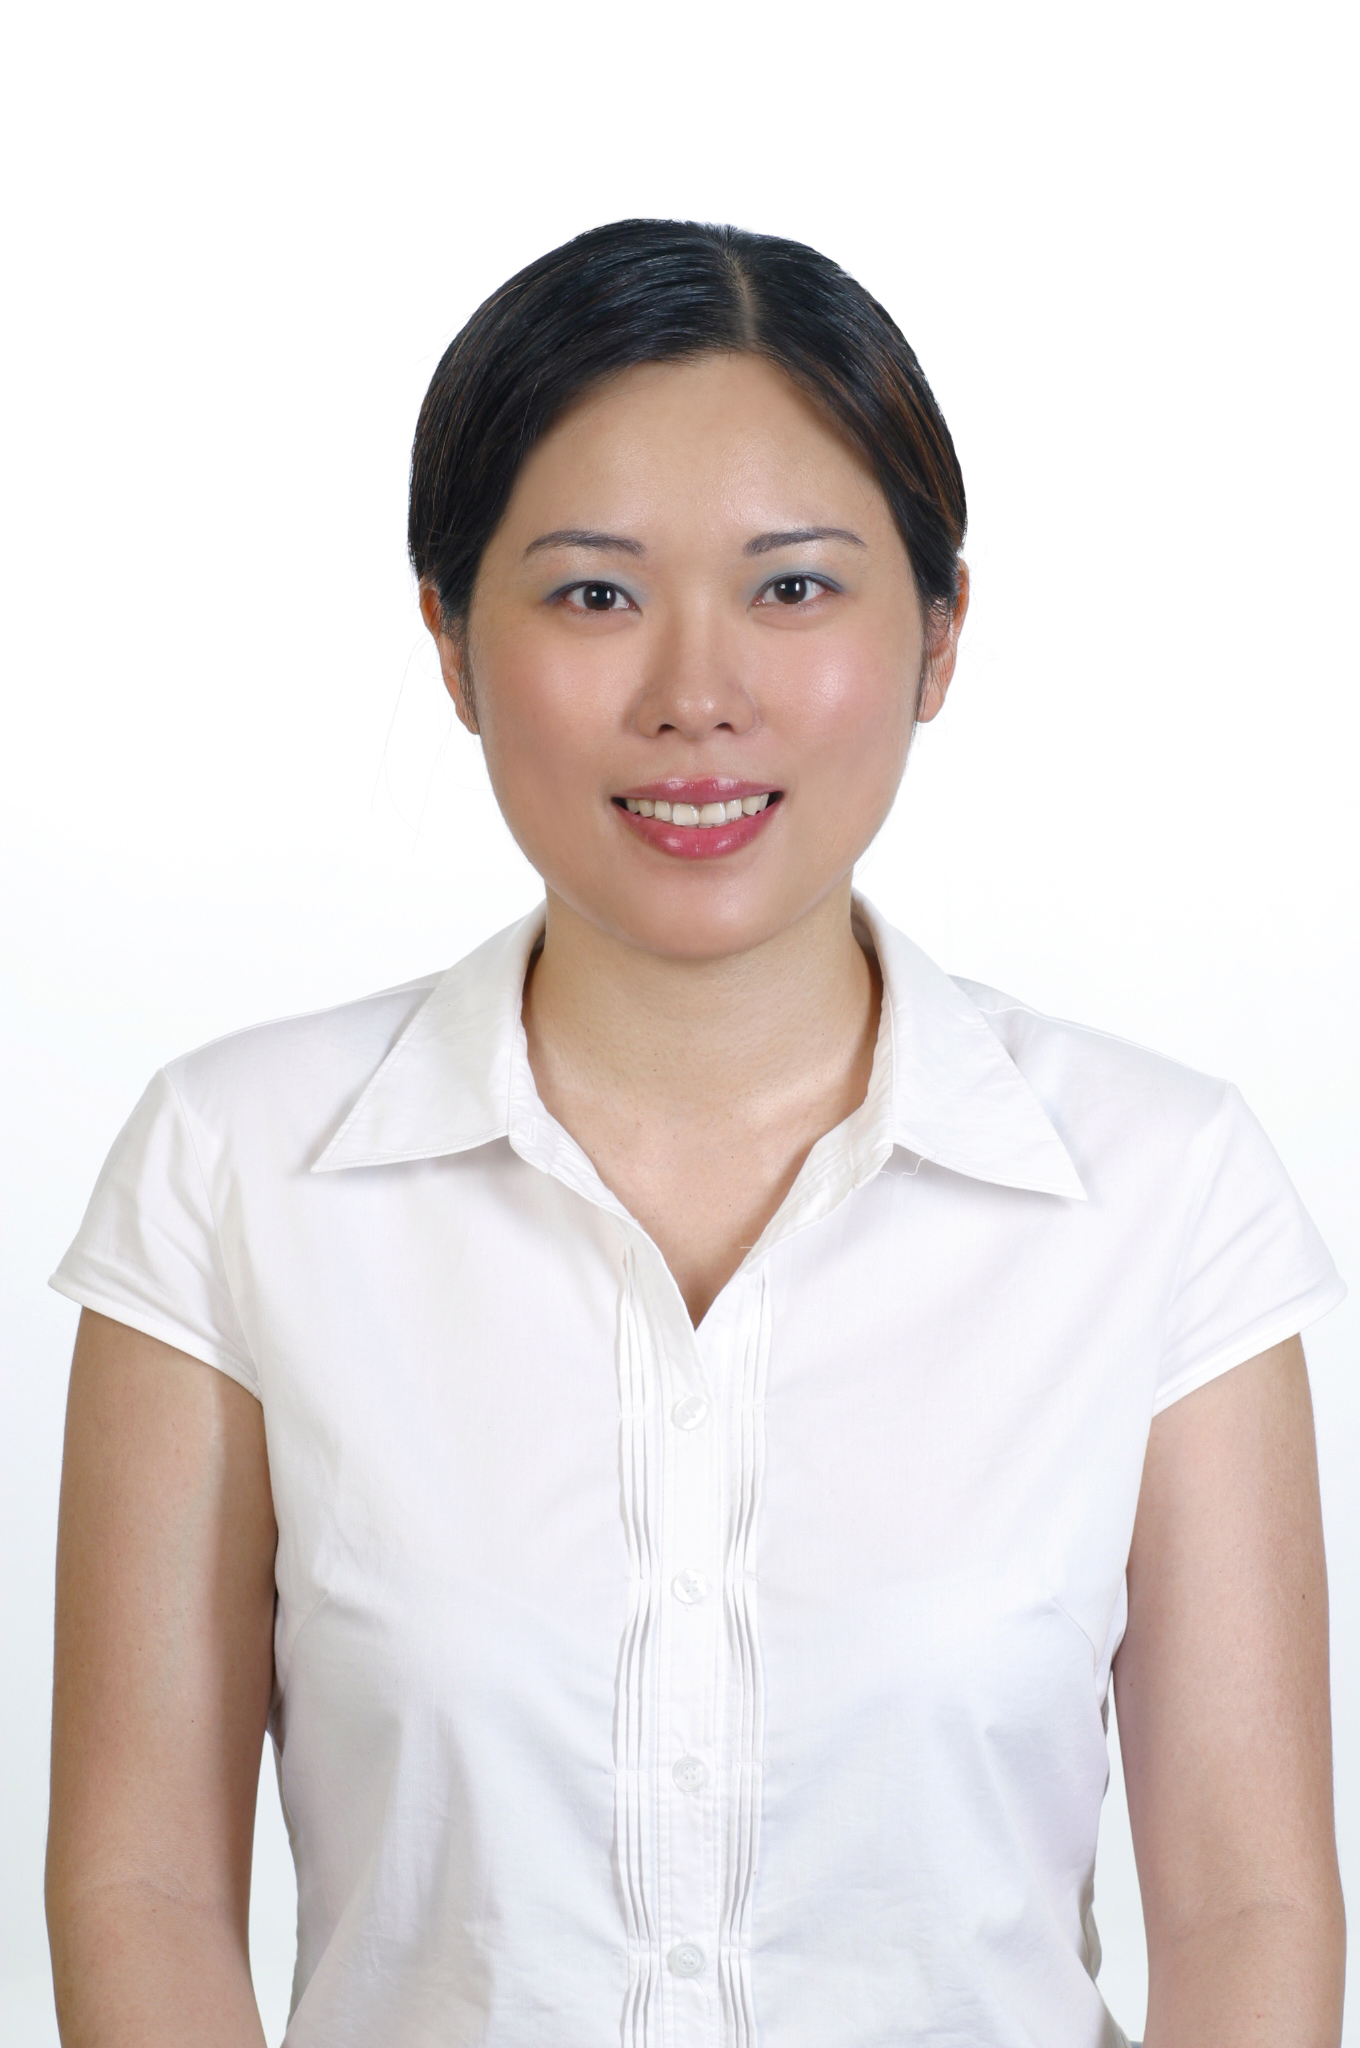 Angela Lai